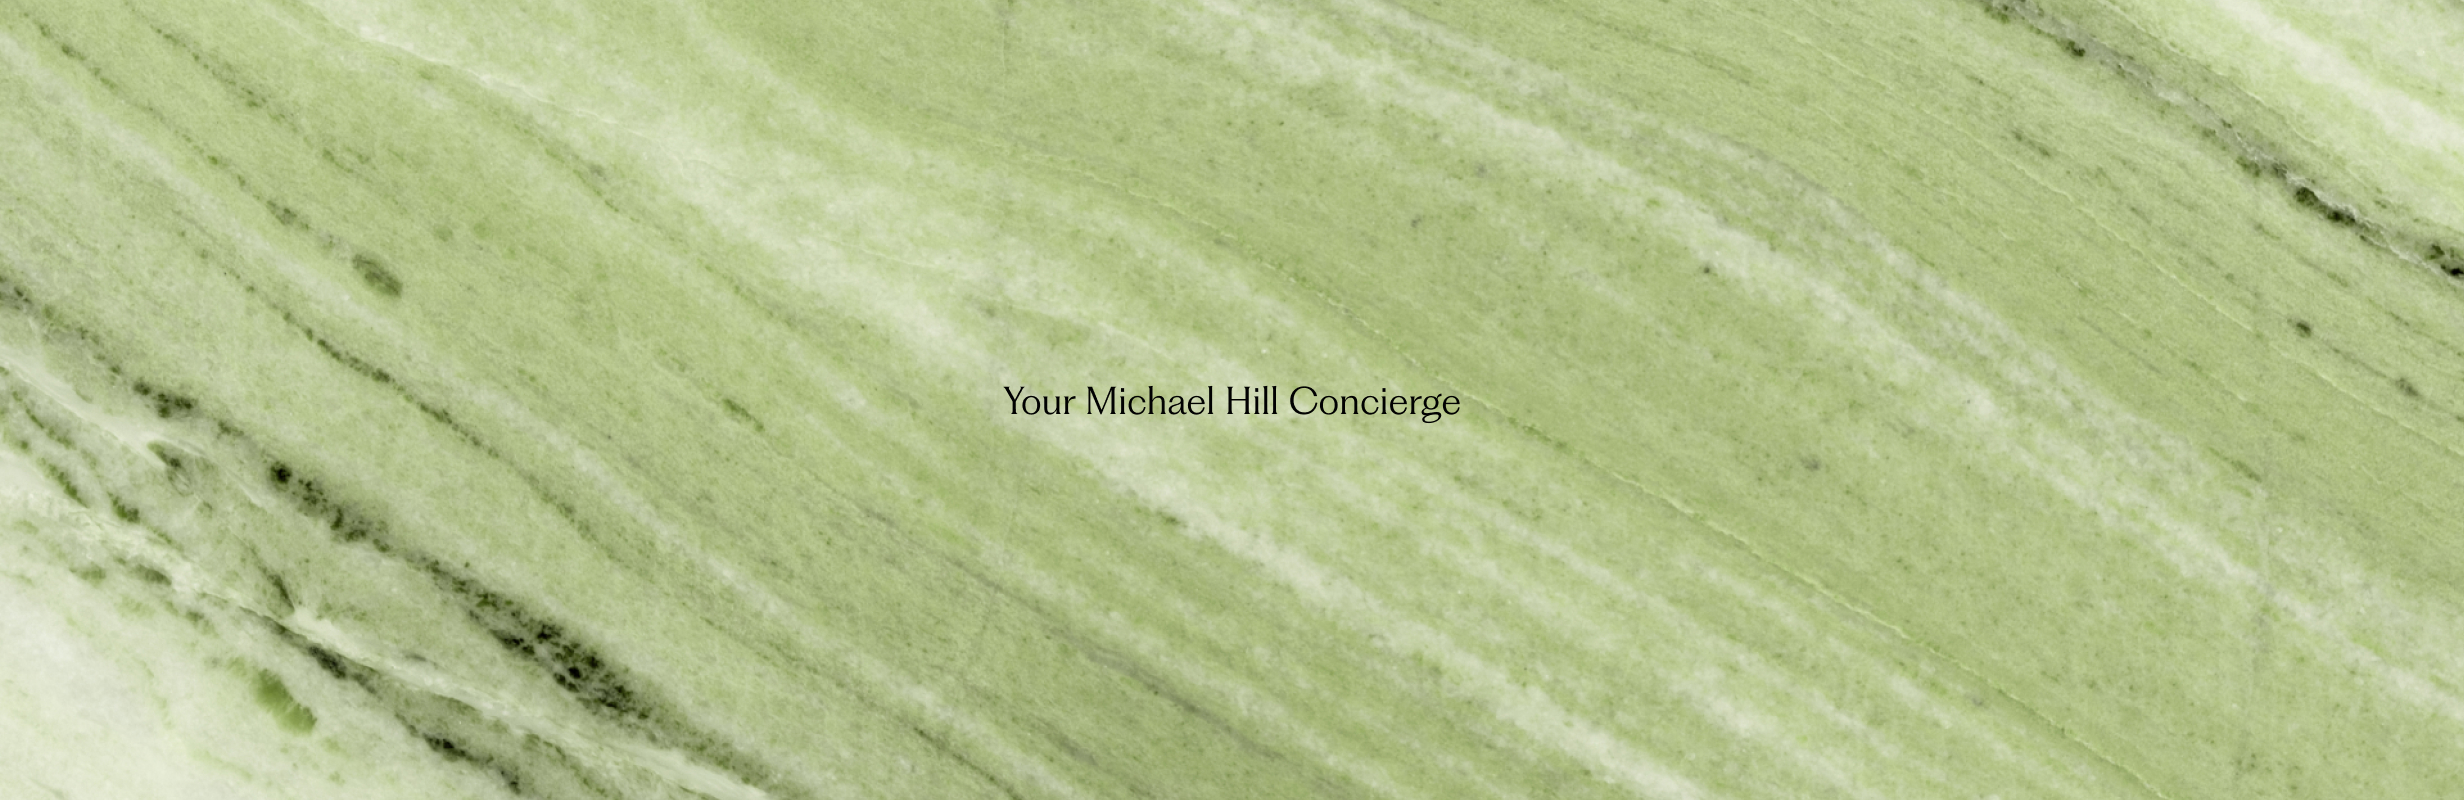 GLOBAL - Michael Hill Concierge - Hero IMG